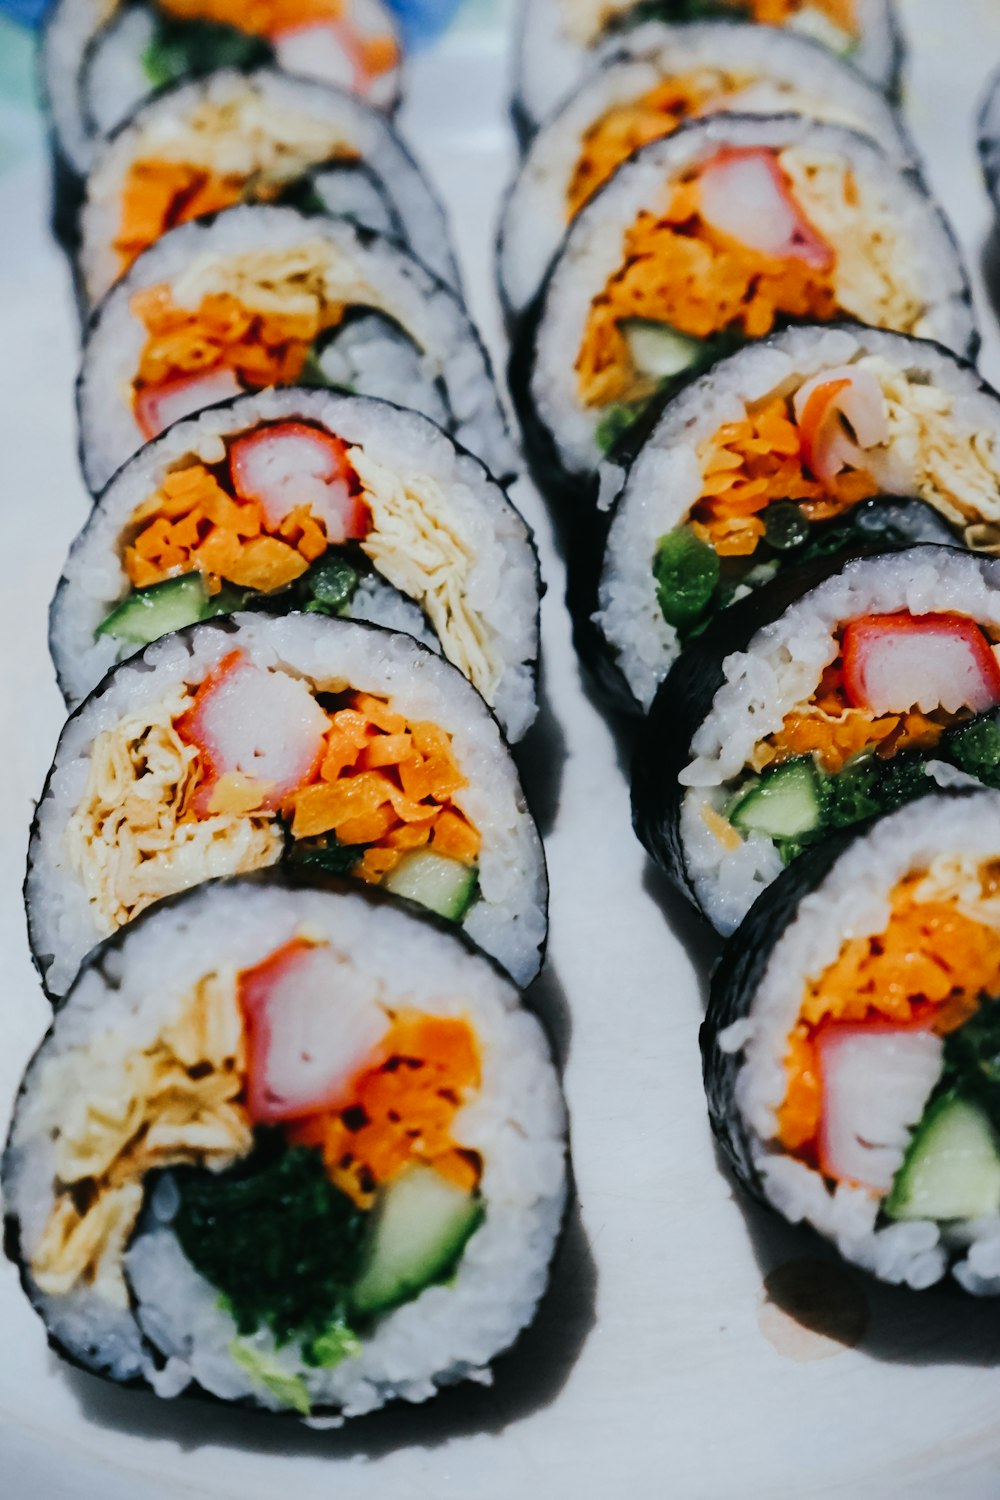 Un plato de sushi